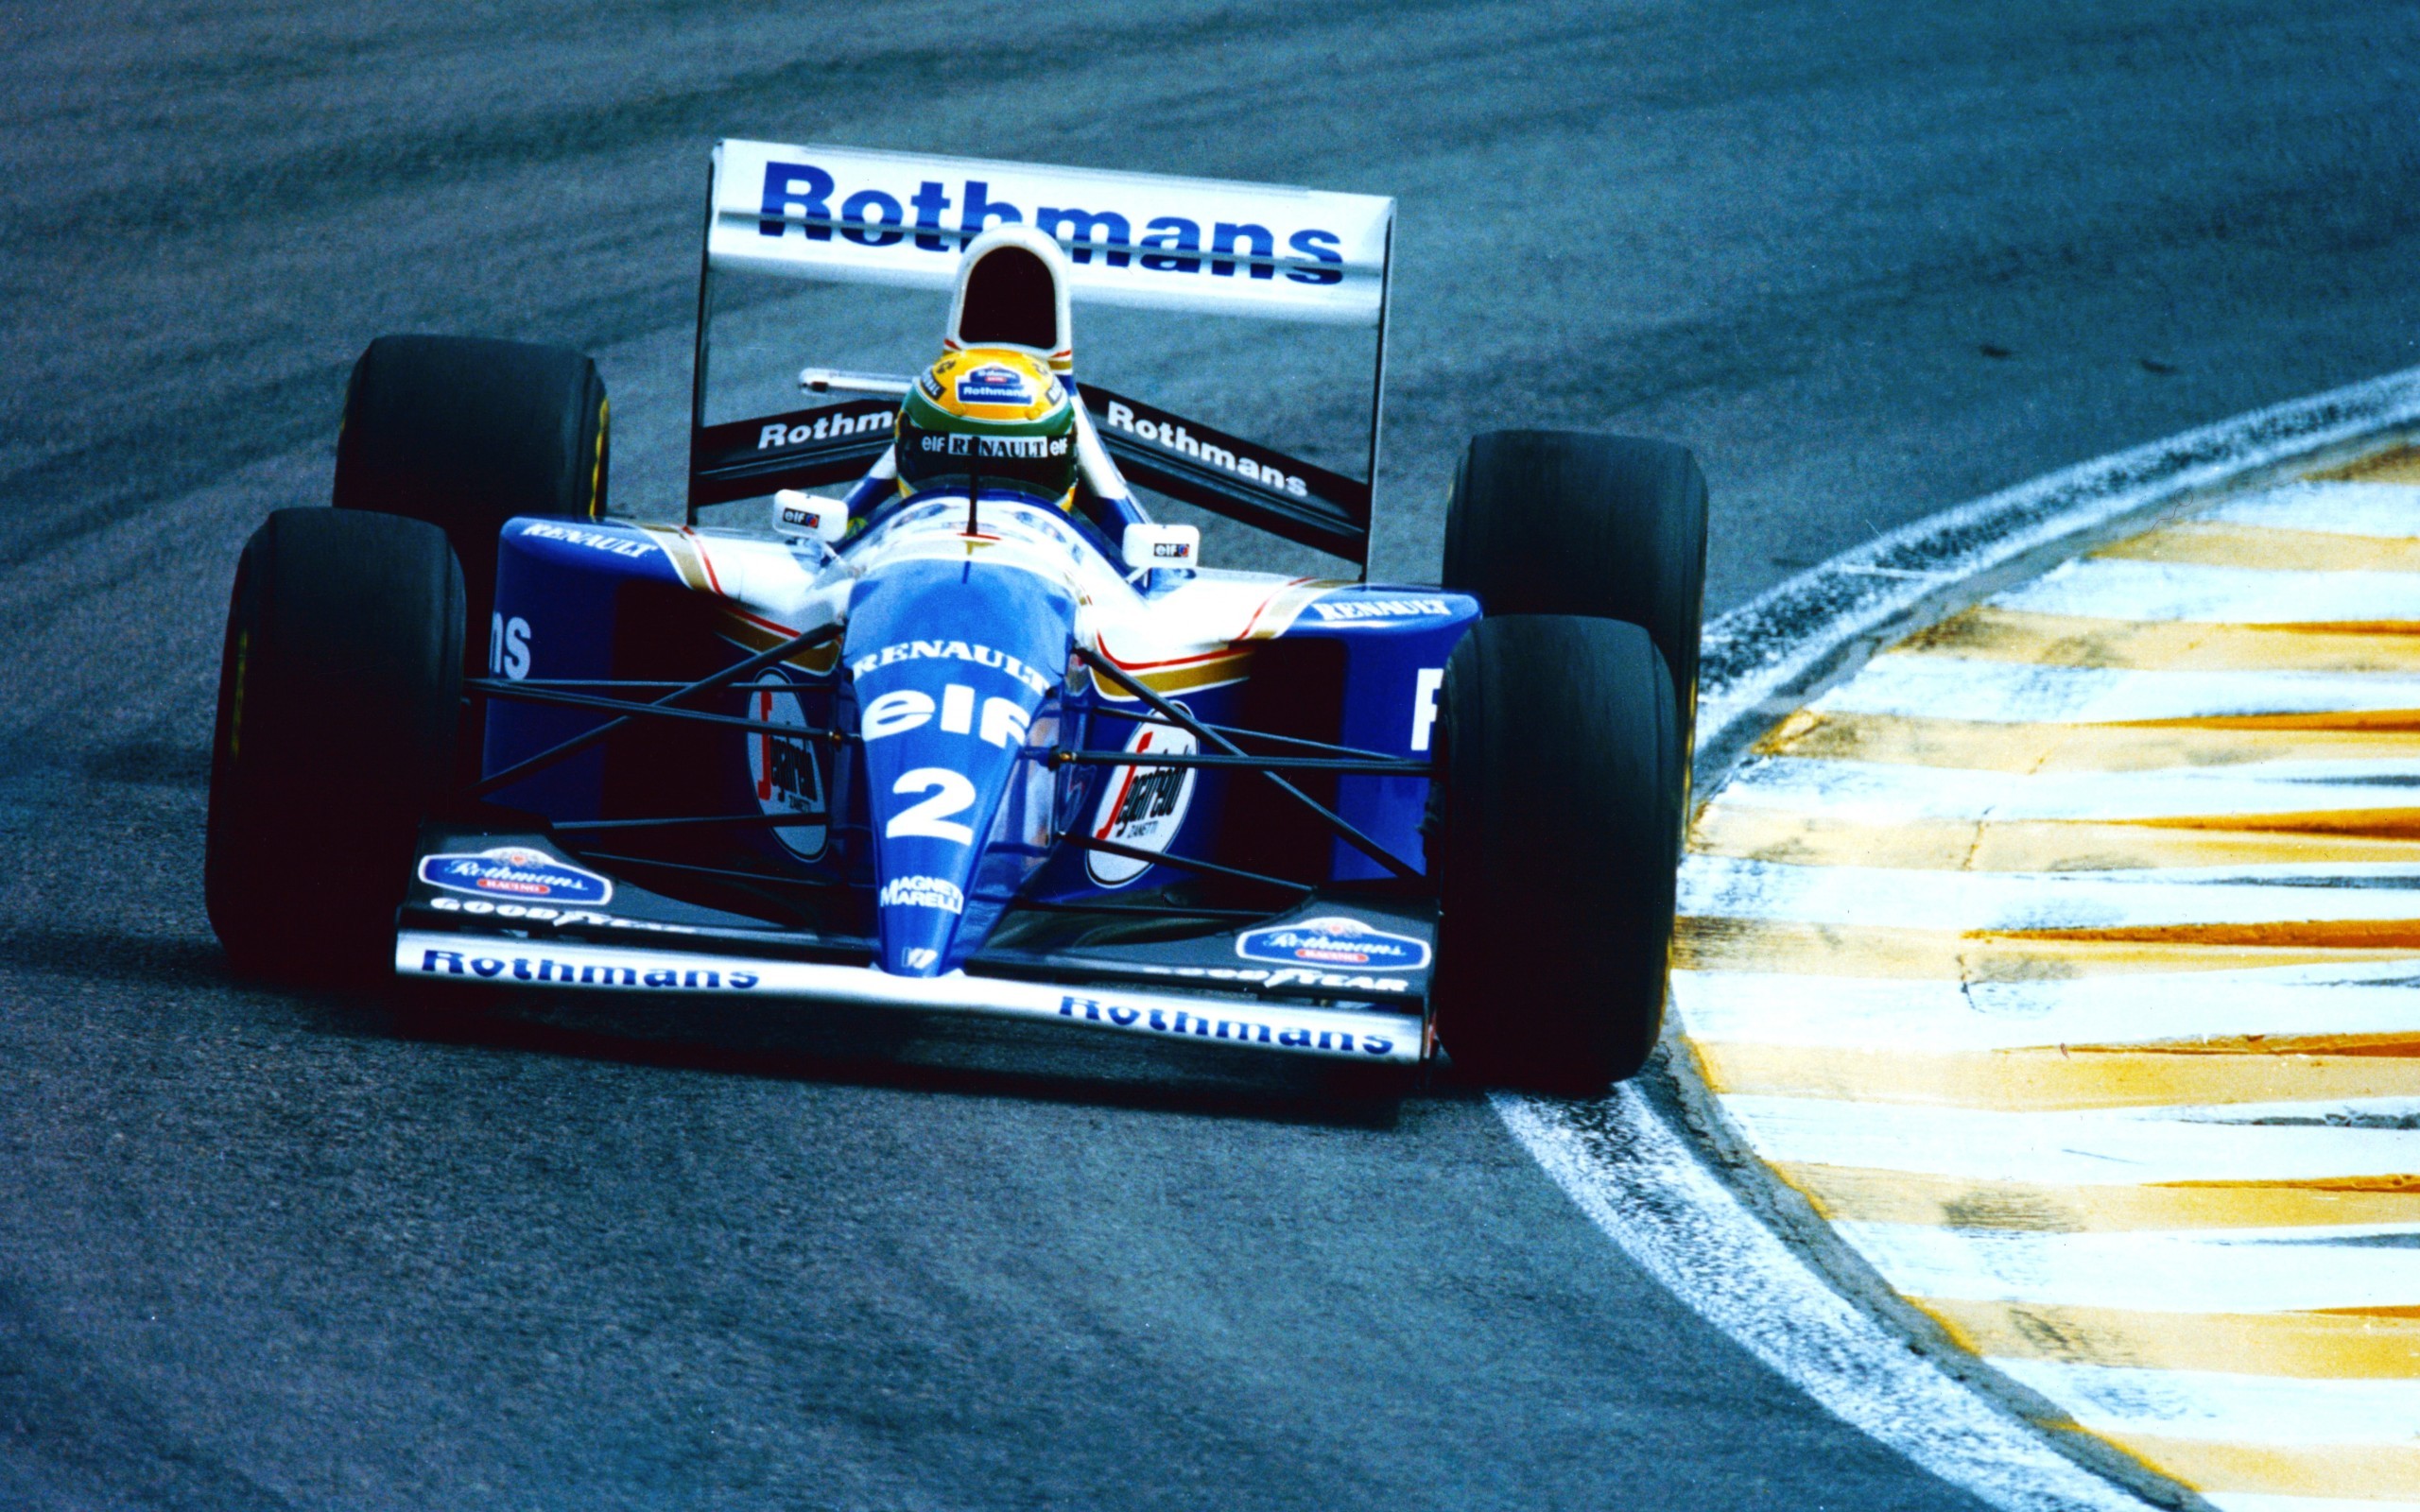 General 2560x1600 car Ayrton Senna Formula 1 race cars racing vehicle sport motorsport Racing driver deceased Brazilian